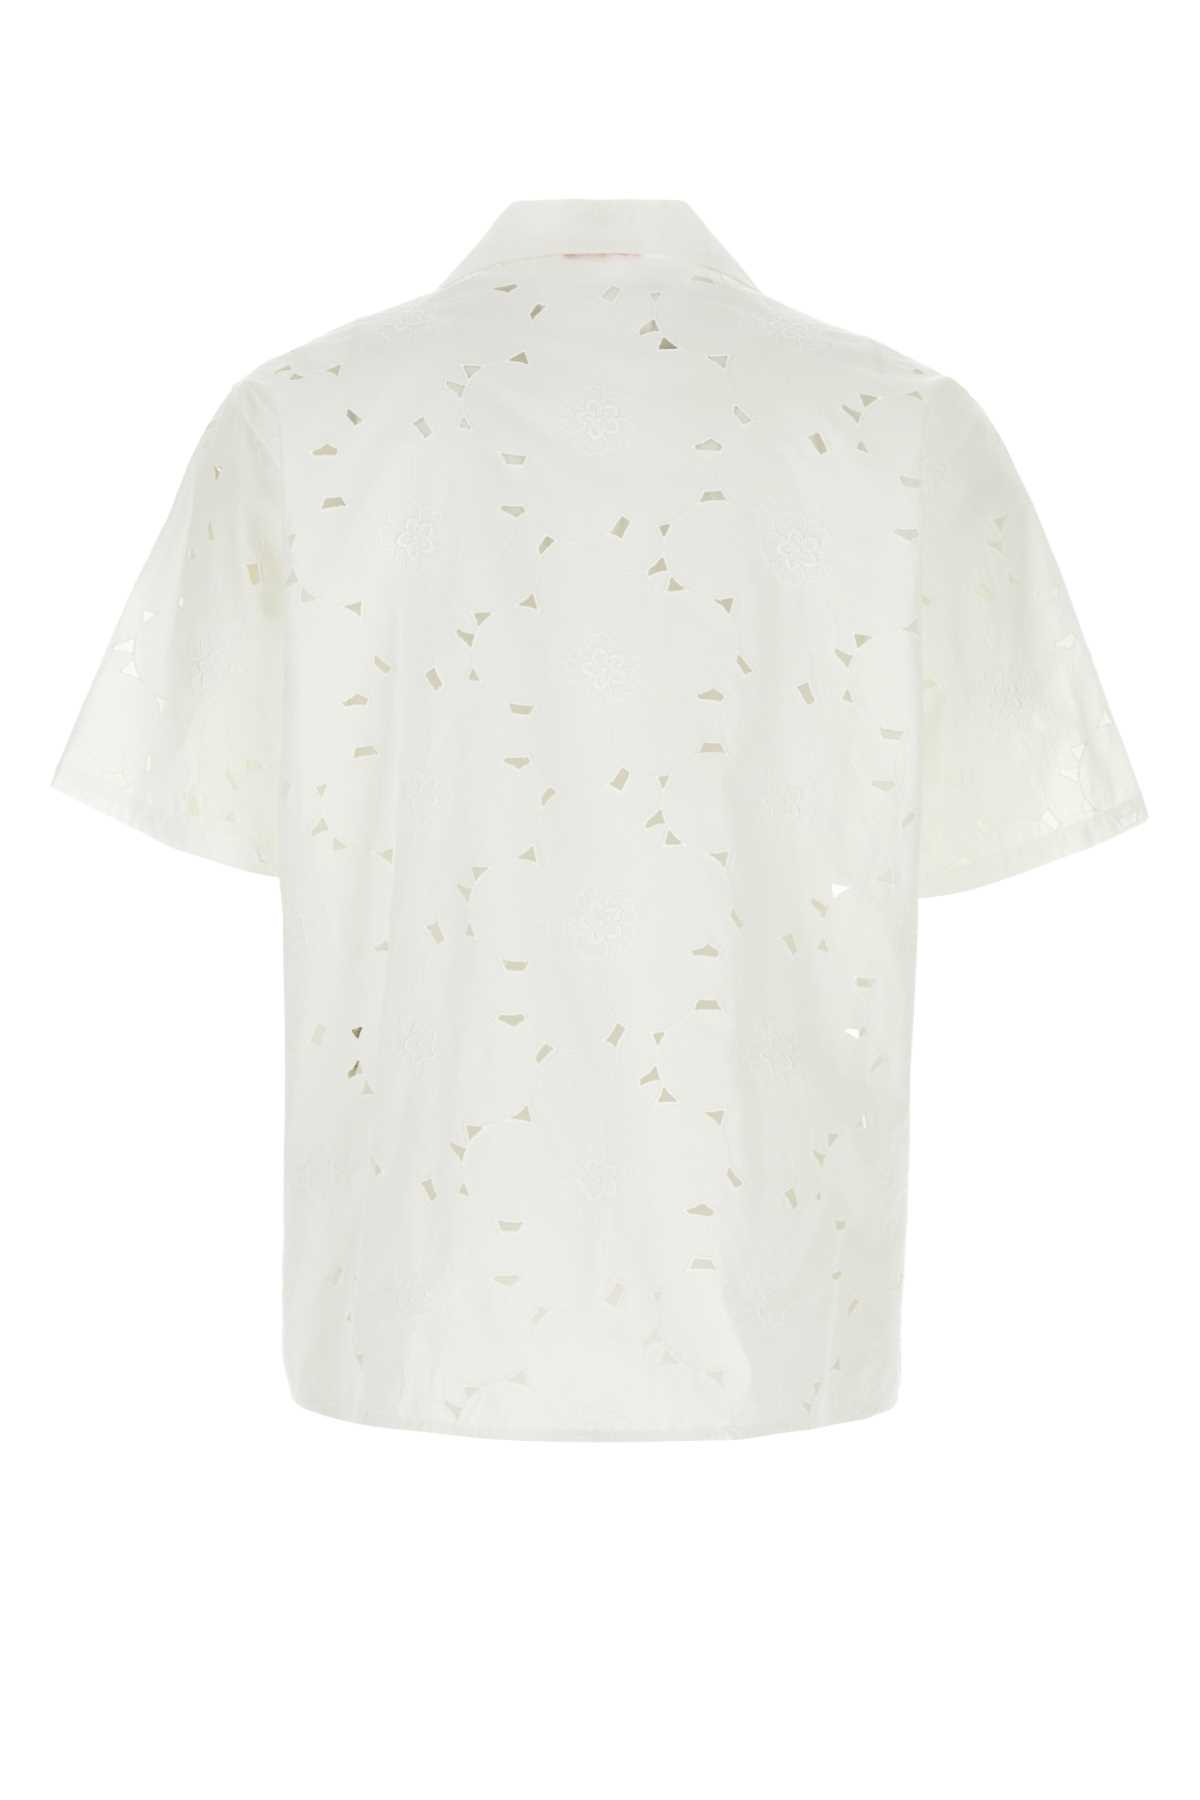 Valentino White Cotton Blend Shirt In Bianco